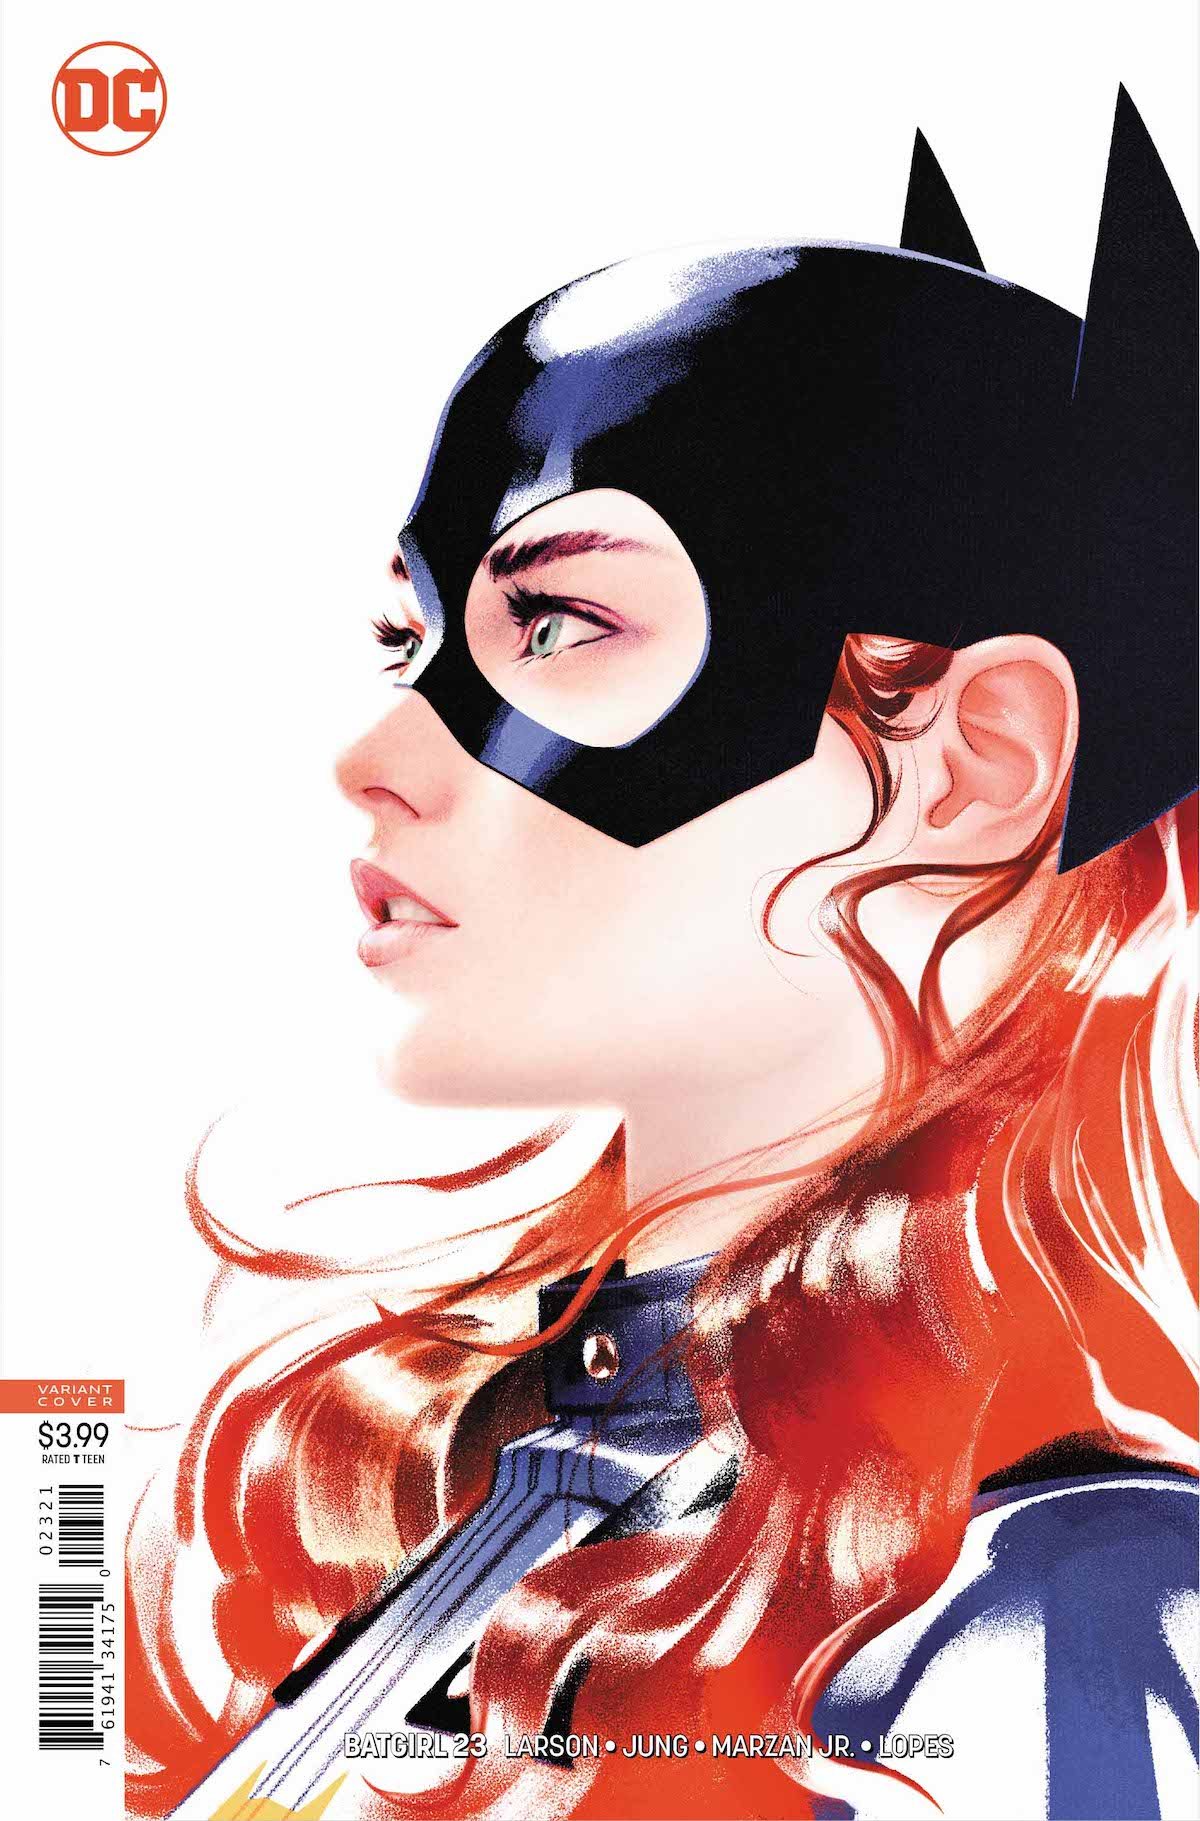 Batgirl #23 variant cover